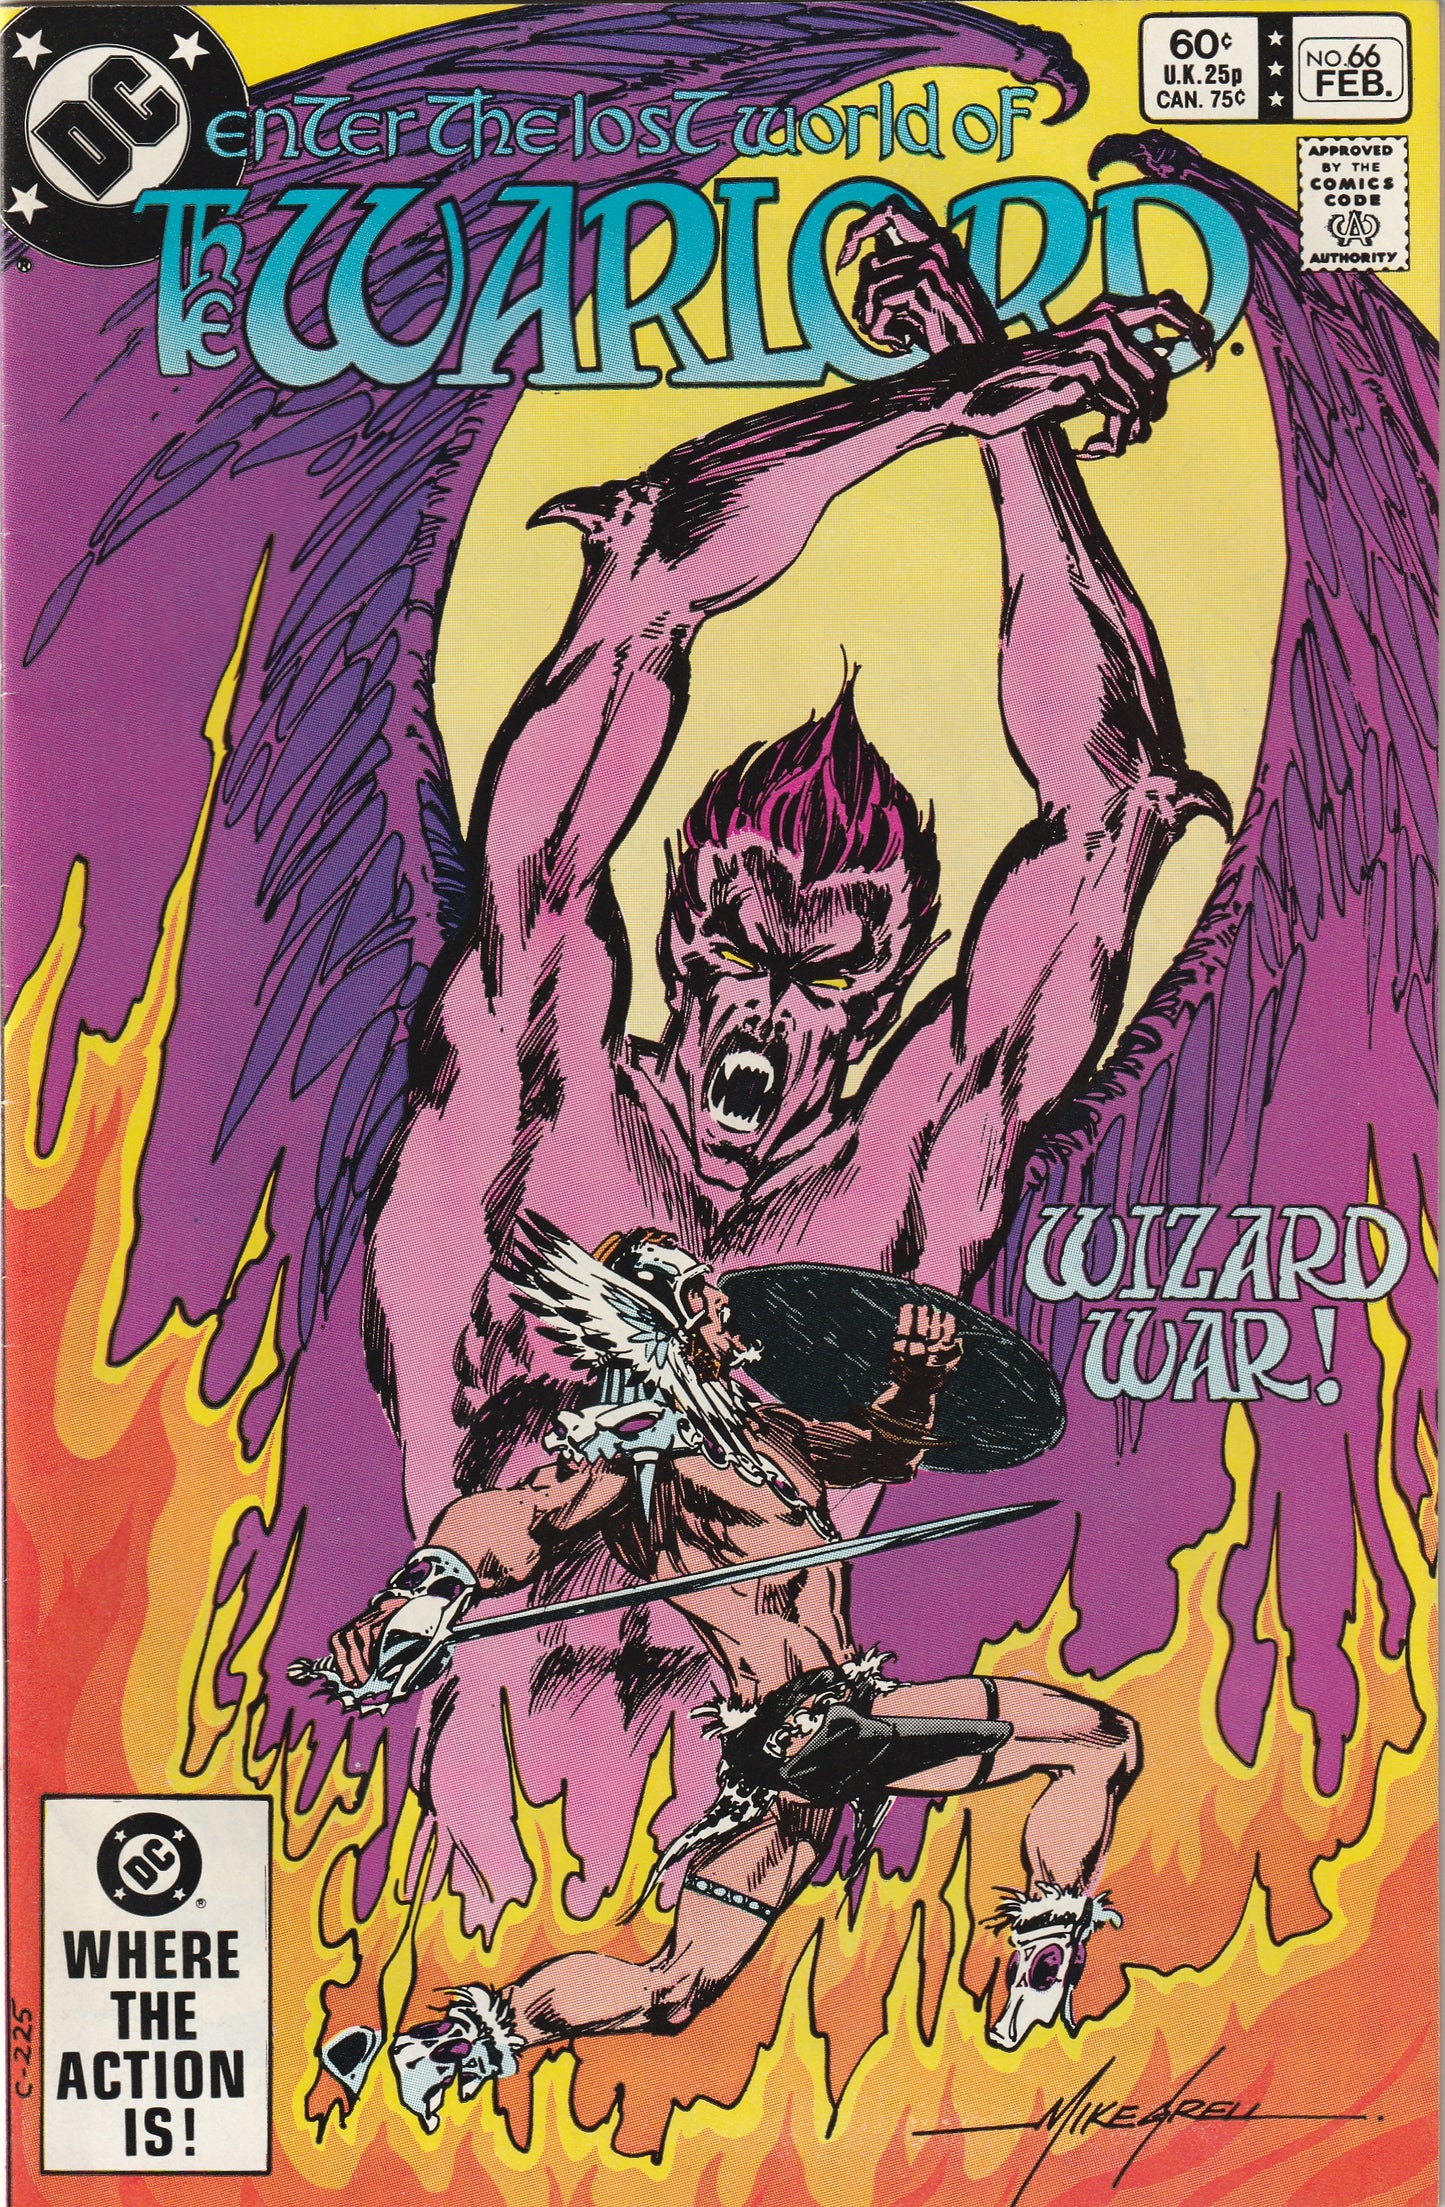 Warlord #66 (1983)